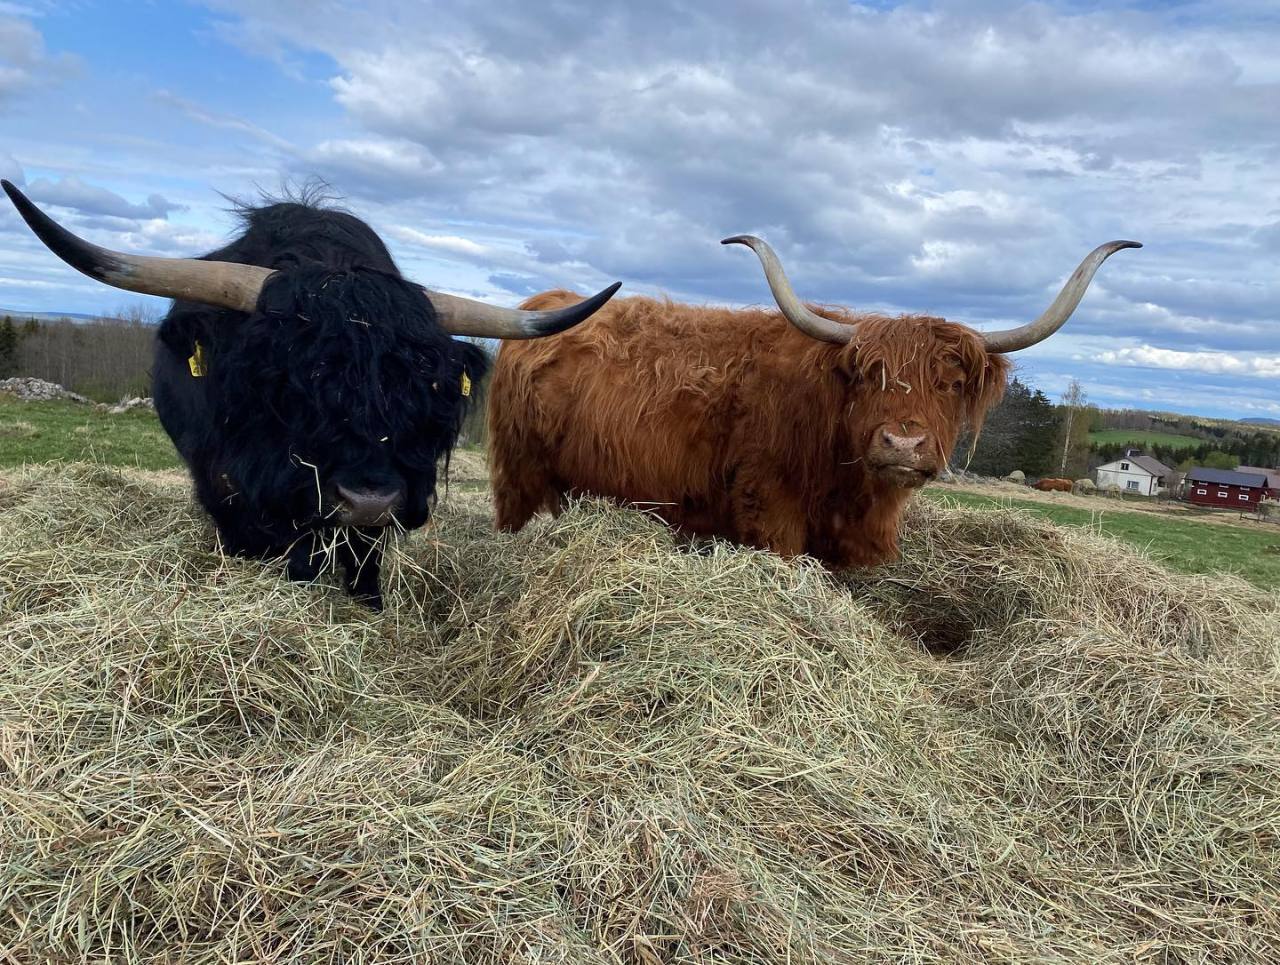 https://instagr.am/p/CdqWd8Ysk4K/ #highlandcattle#cow#cows#animals#cattle#fluffy#farm#farmlife#countrylife#countryside#finland